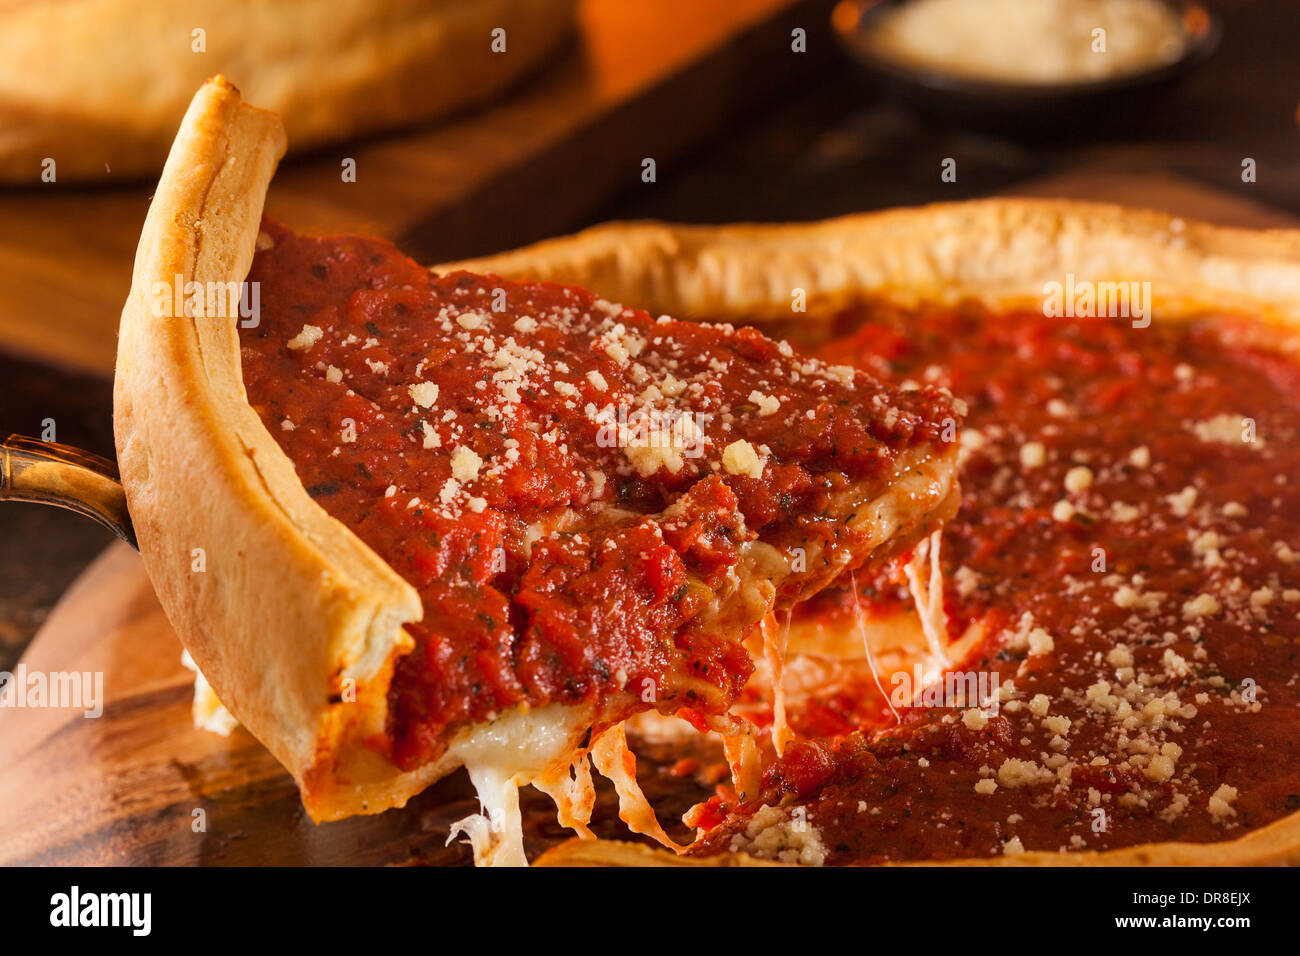 Plat profond style Chicago pizza au fromage avec sauce tomate Banque D'Images